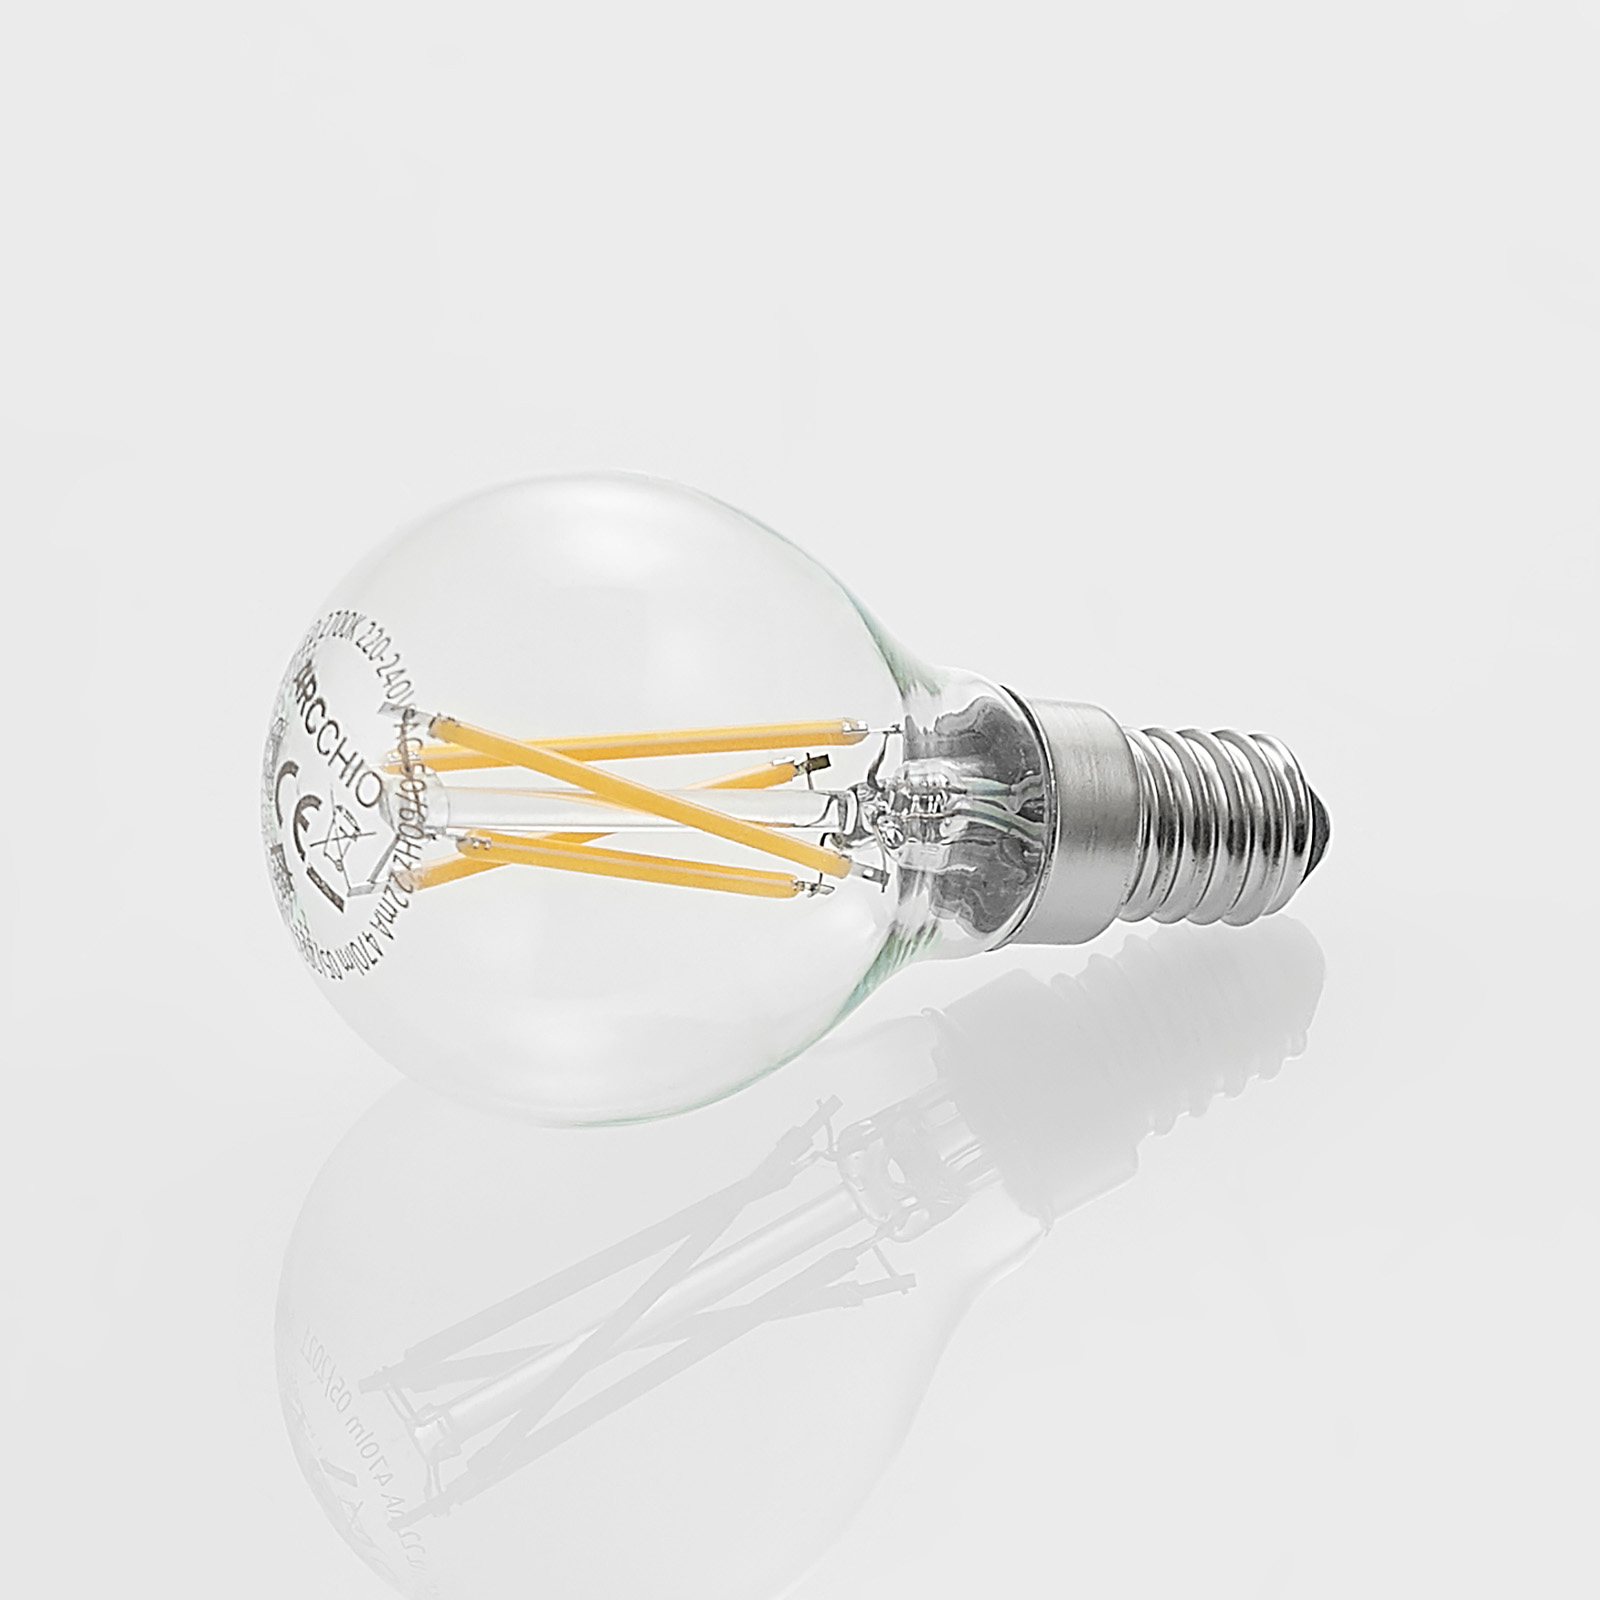 LED lamp E14 4W 2.700K filament druppel dimbaar